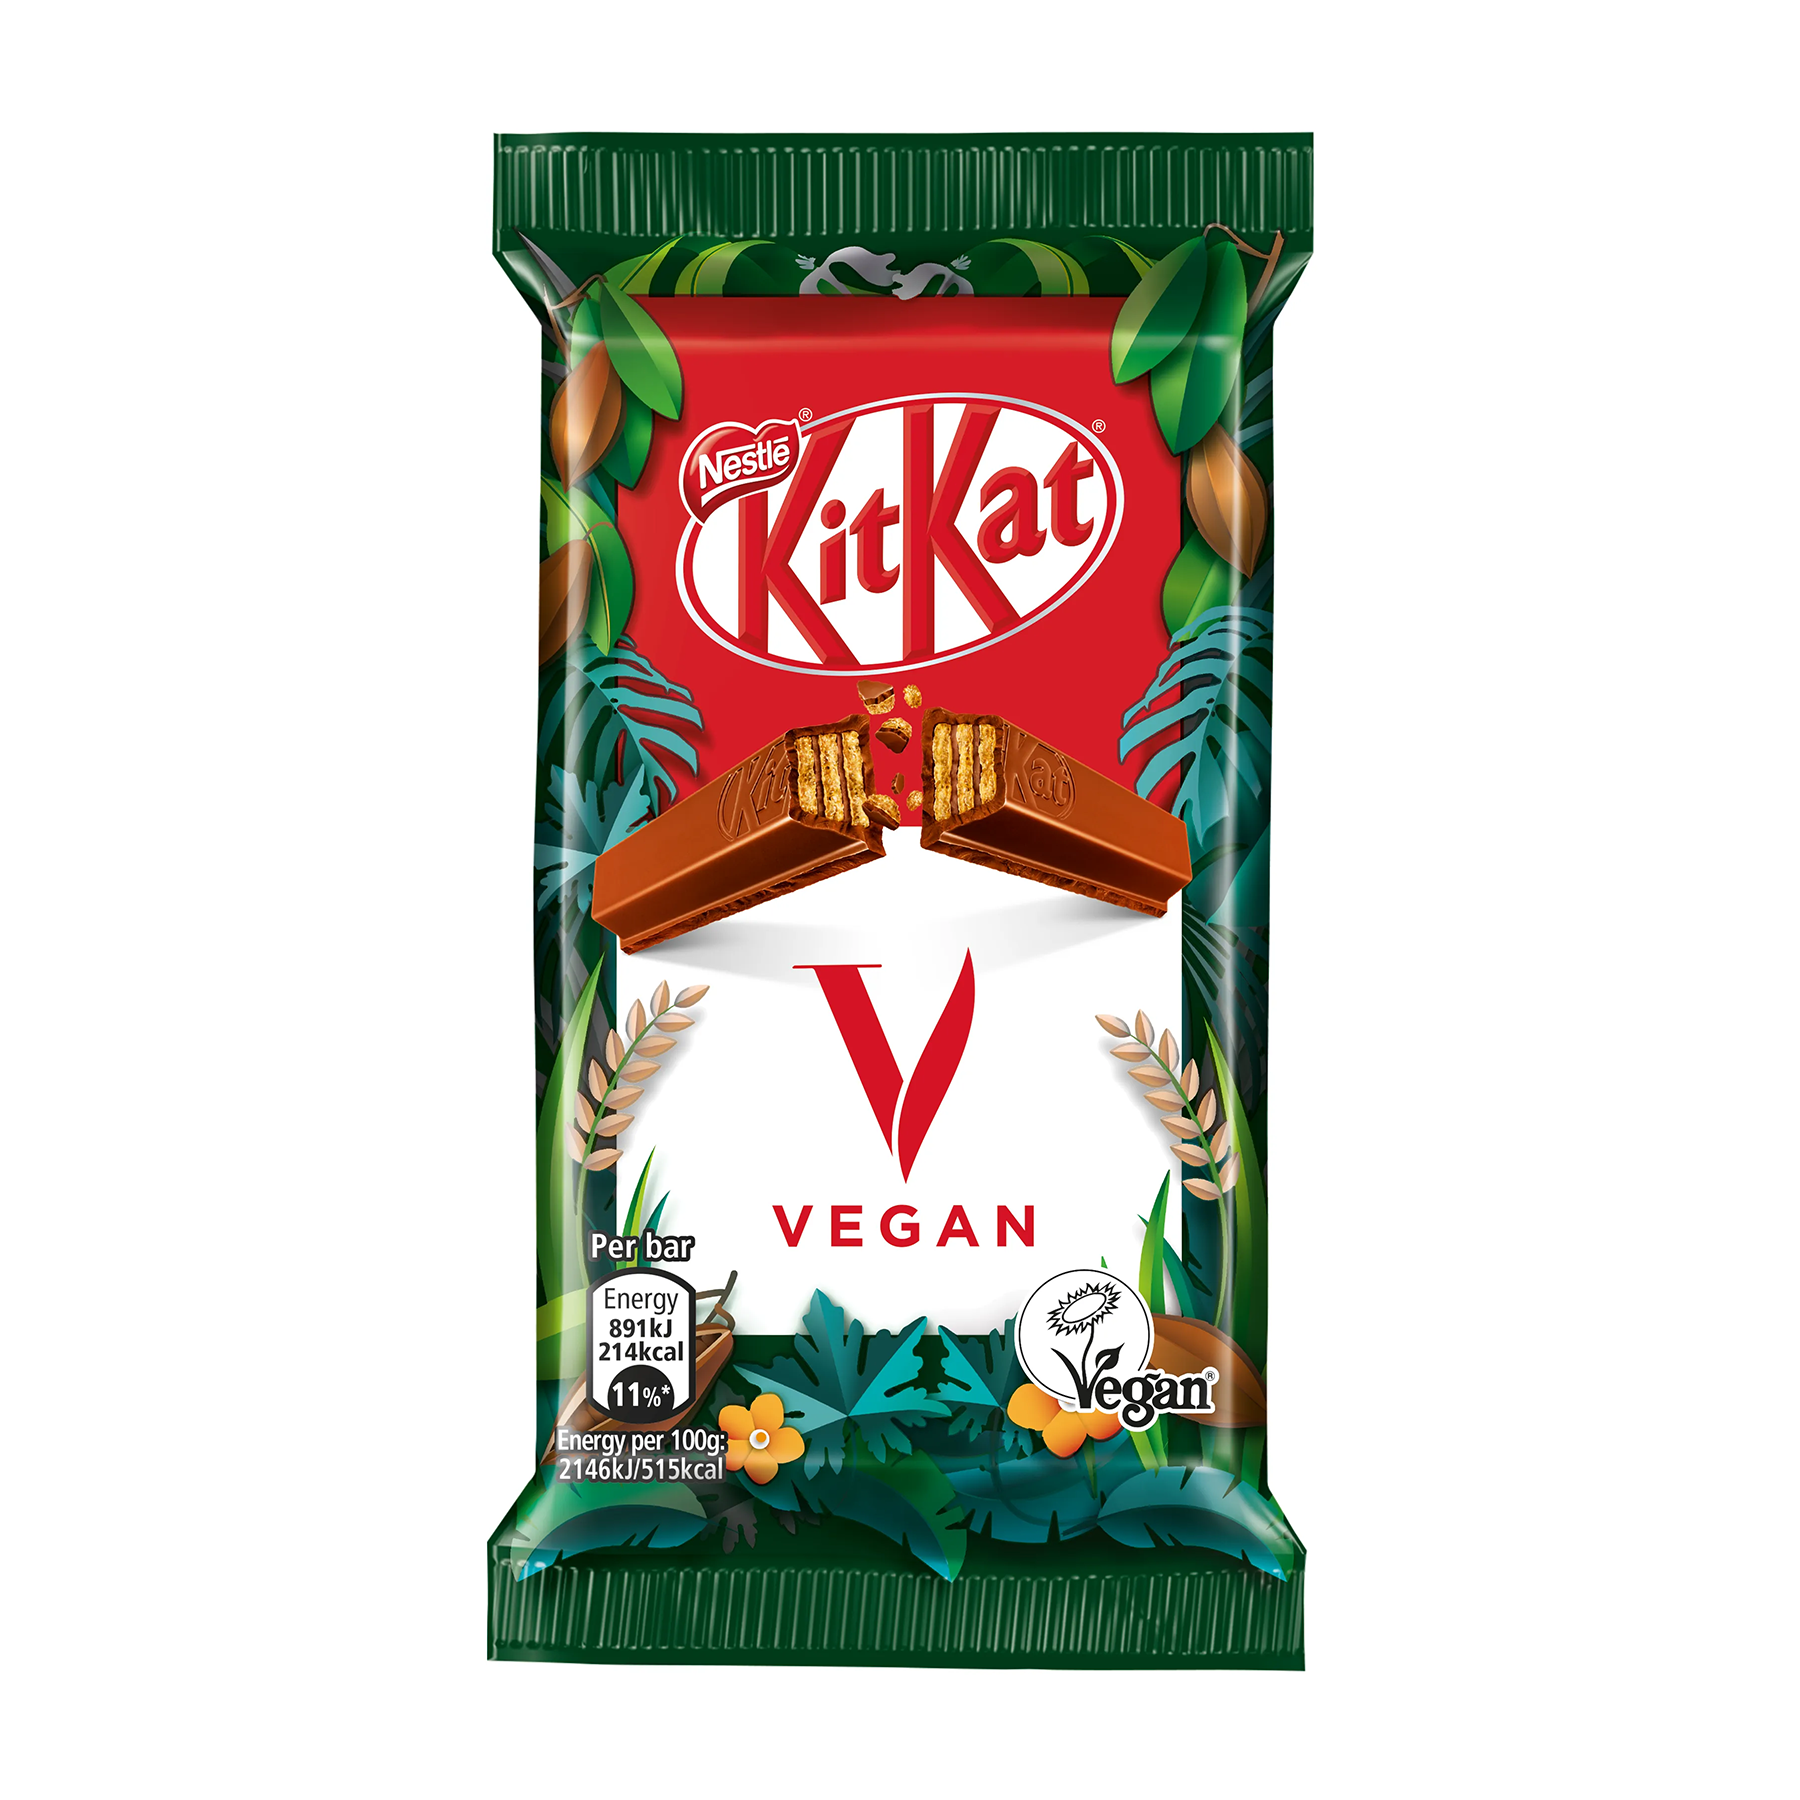 Kitkat Vegan